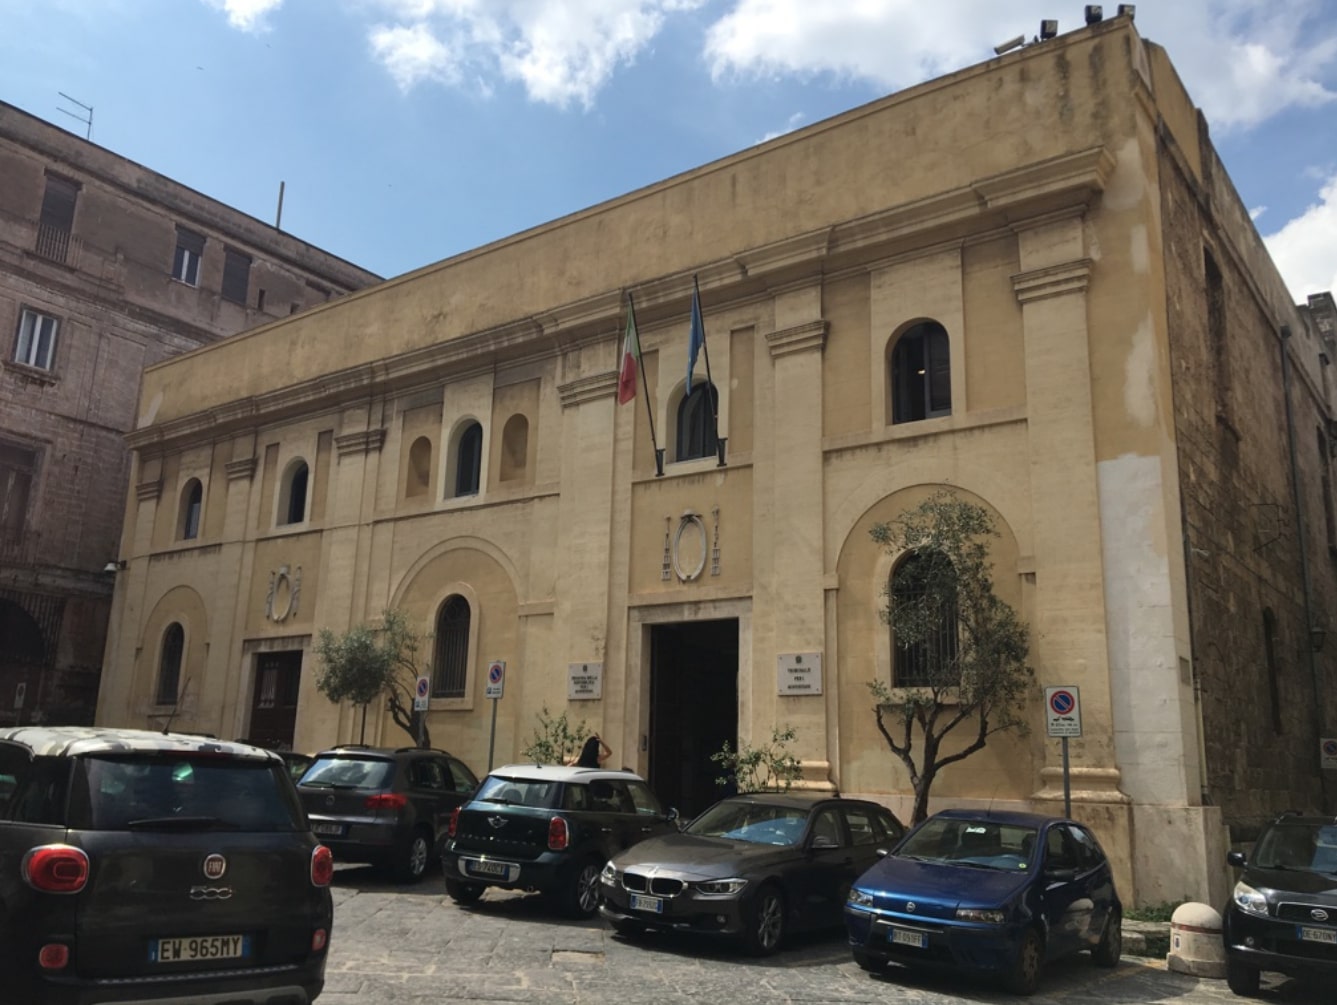 Convento S. Chiara (convento) - Taranto (TA)  (XVII)